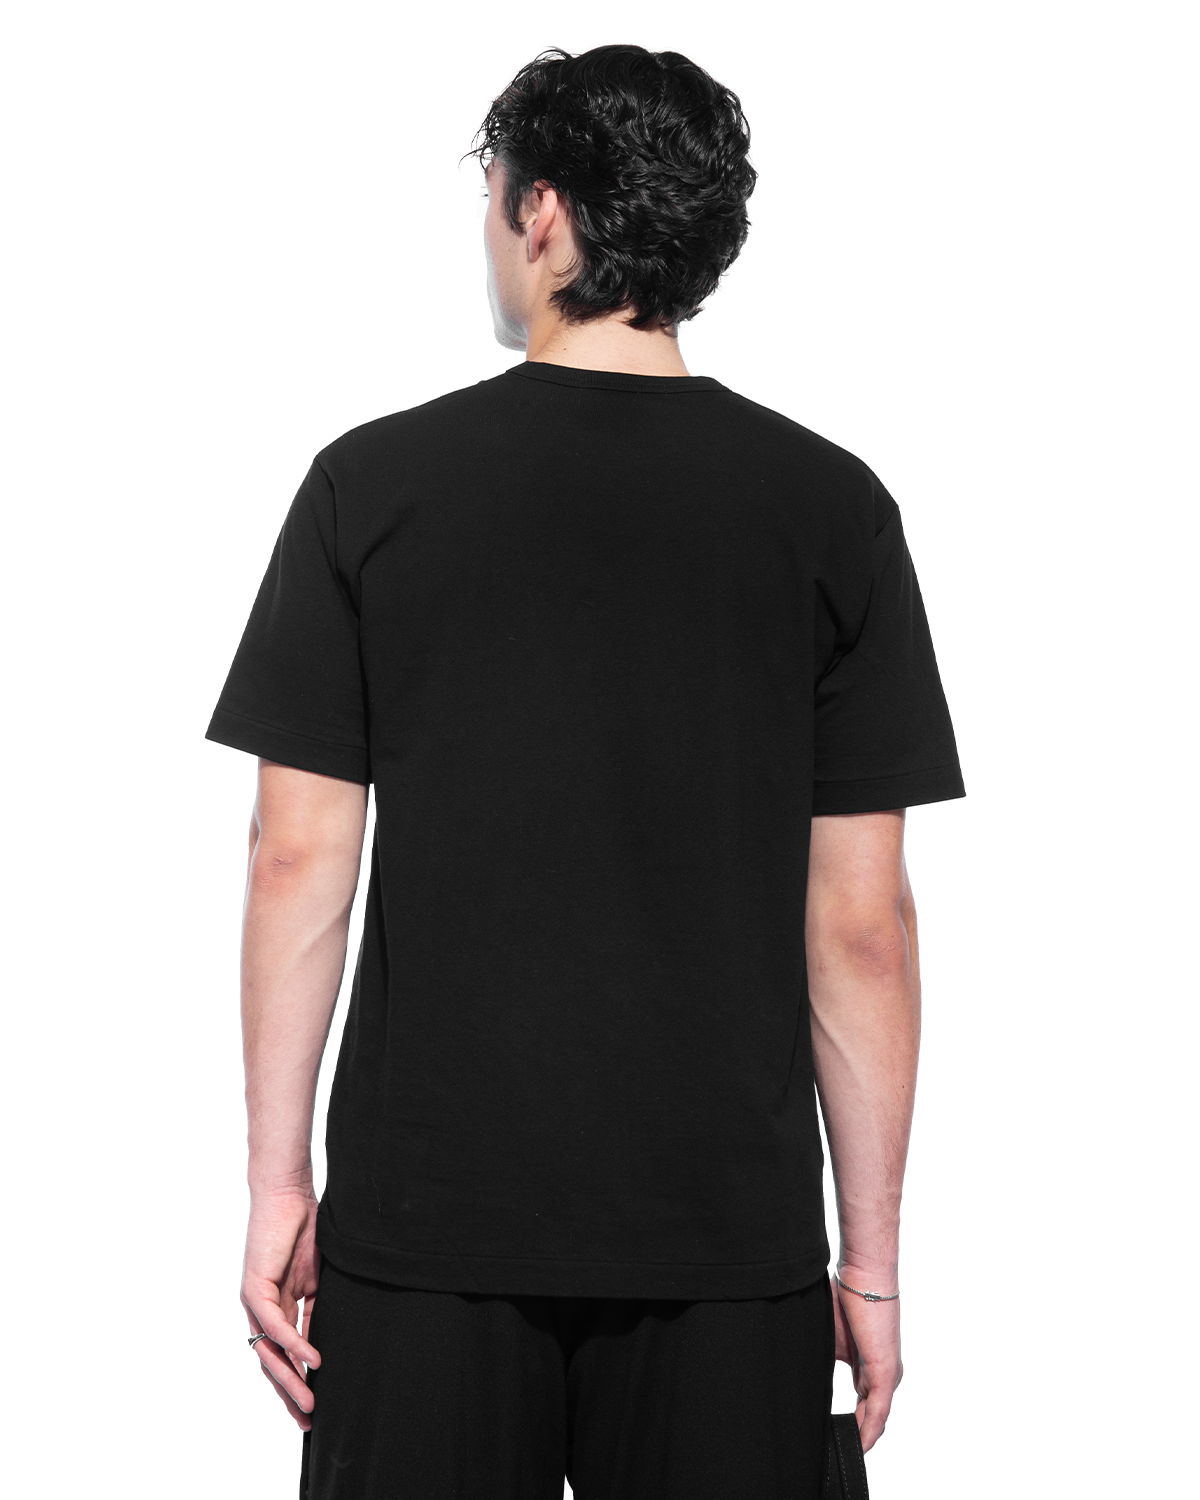 CDG BLACK Graphic T-Shirt Black